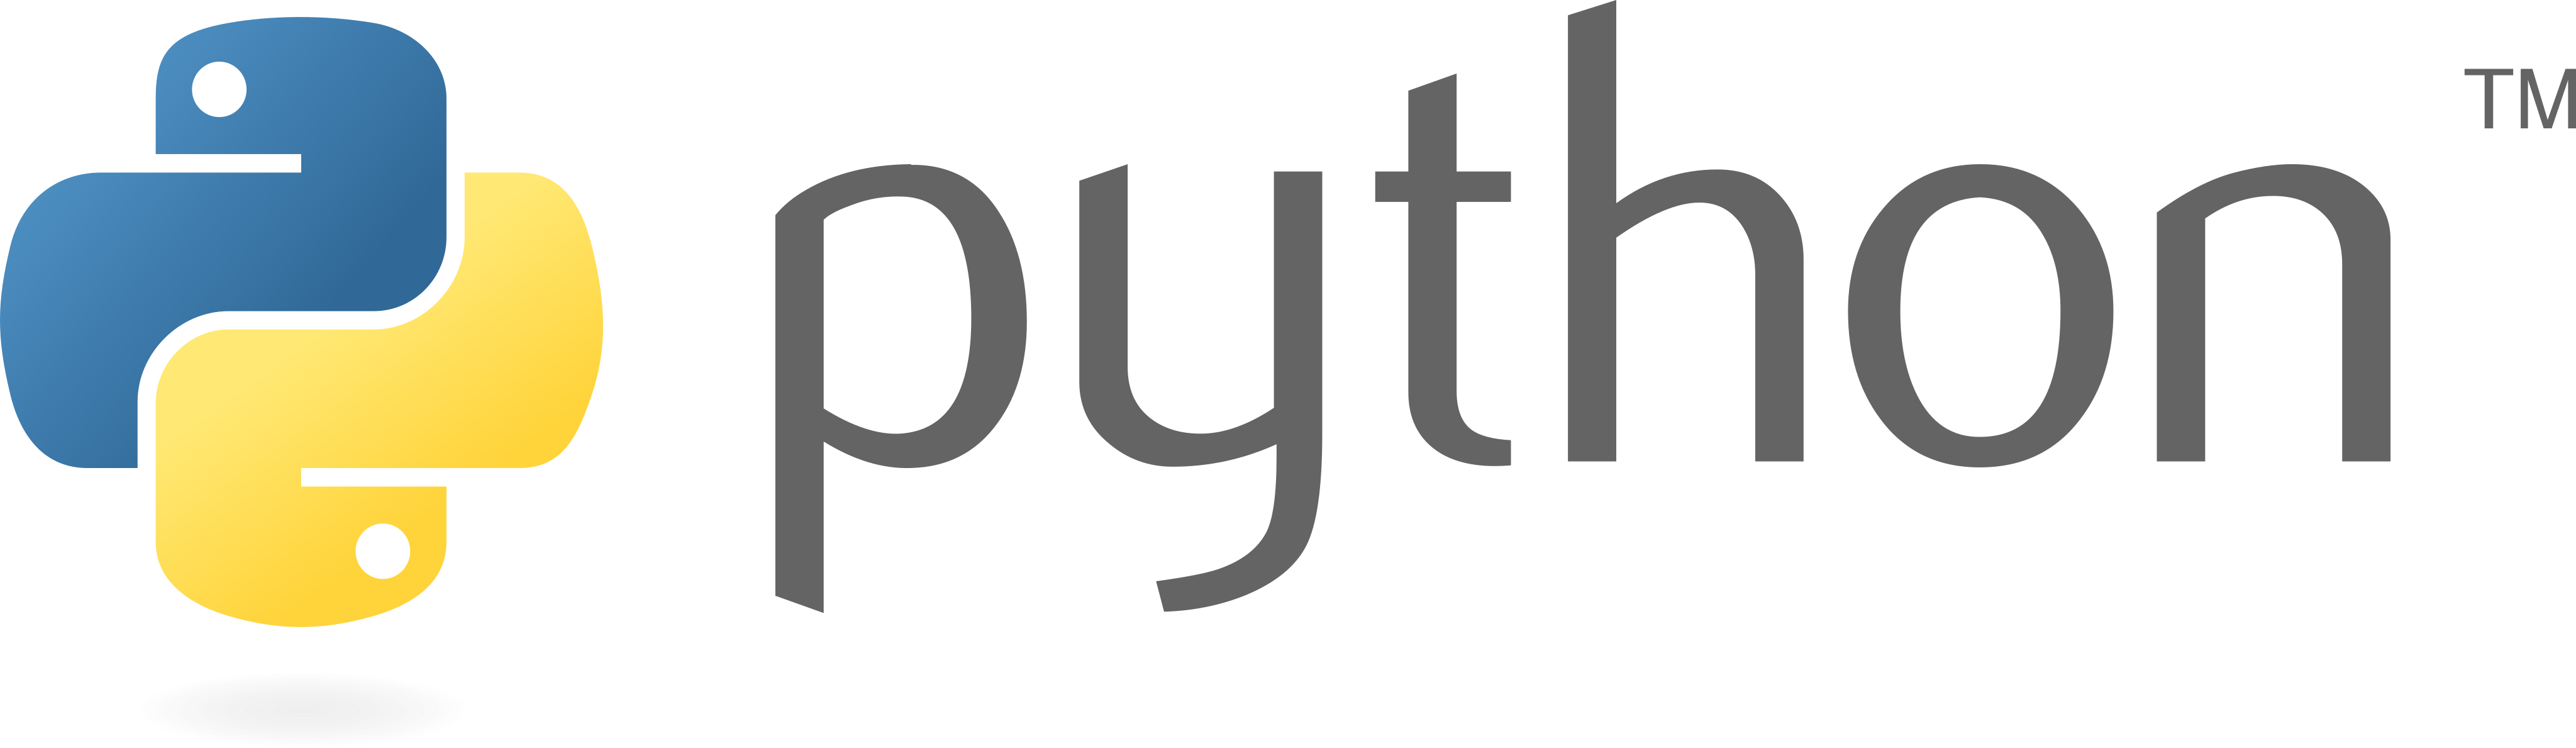 python logo 1 - Python Logo